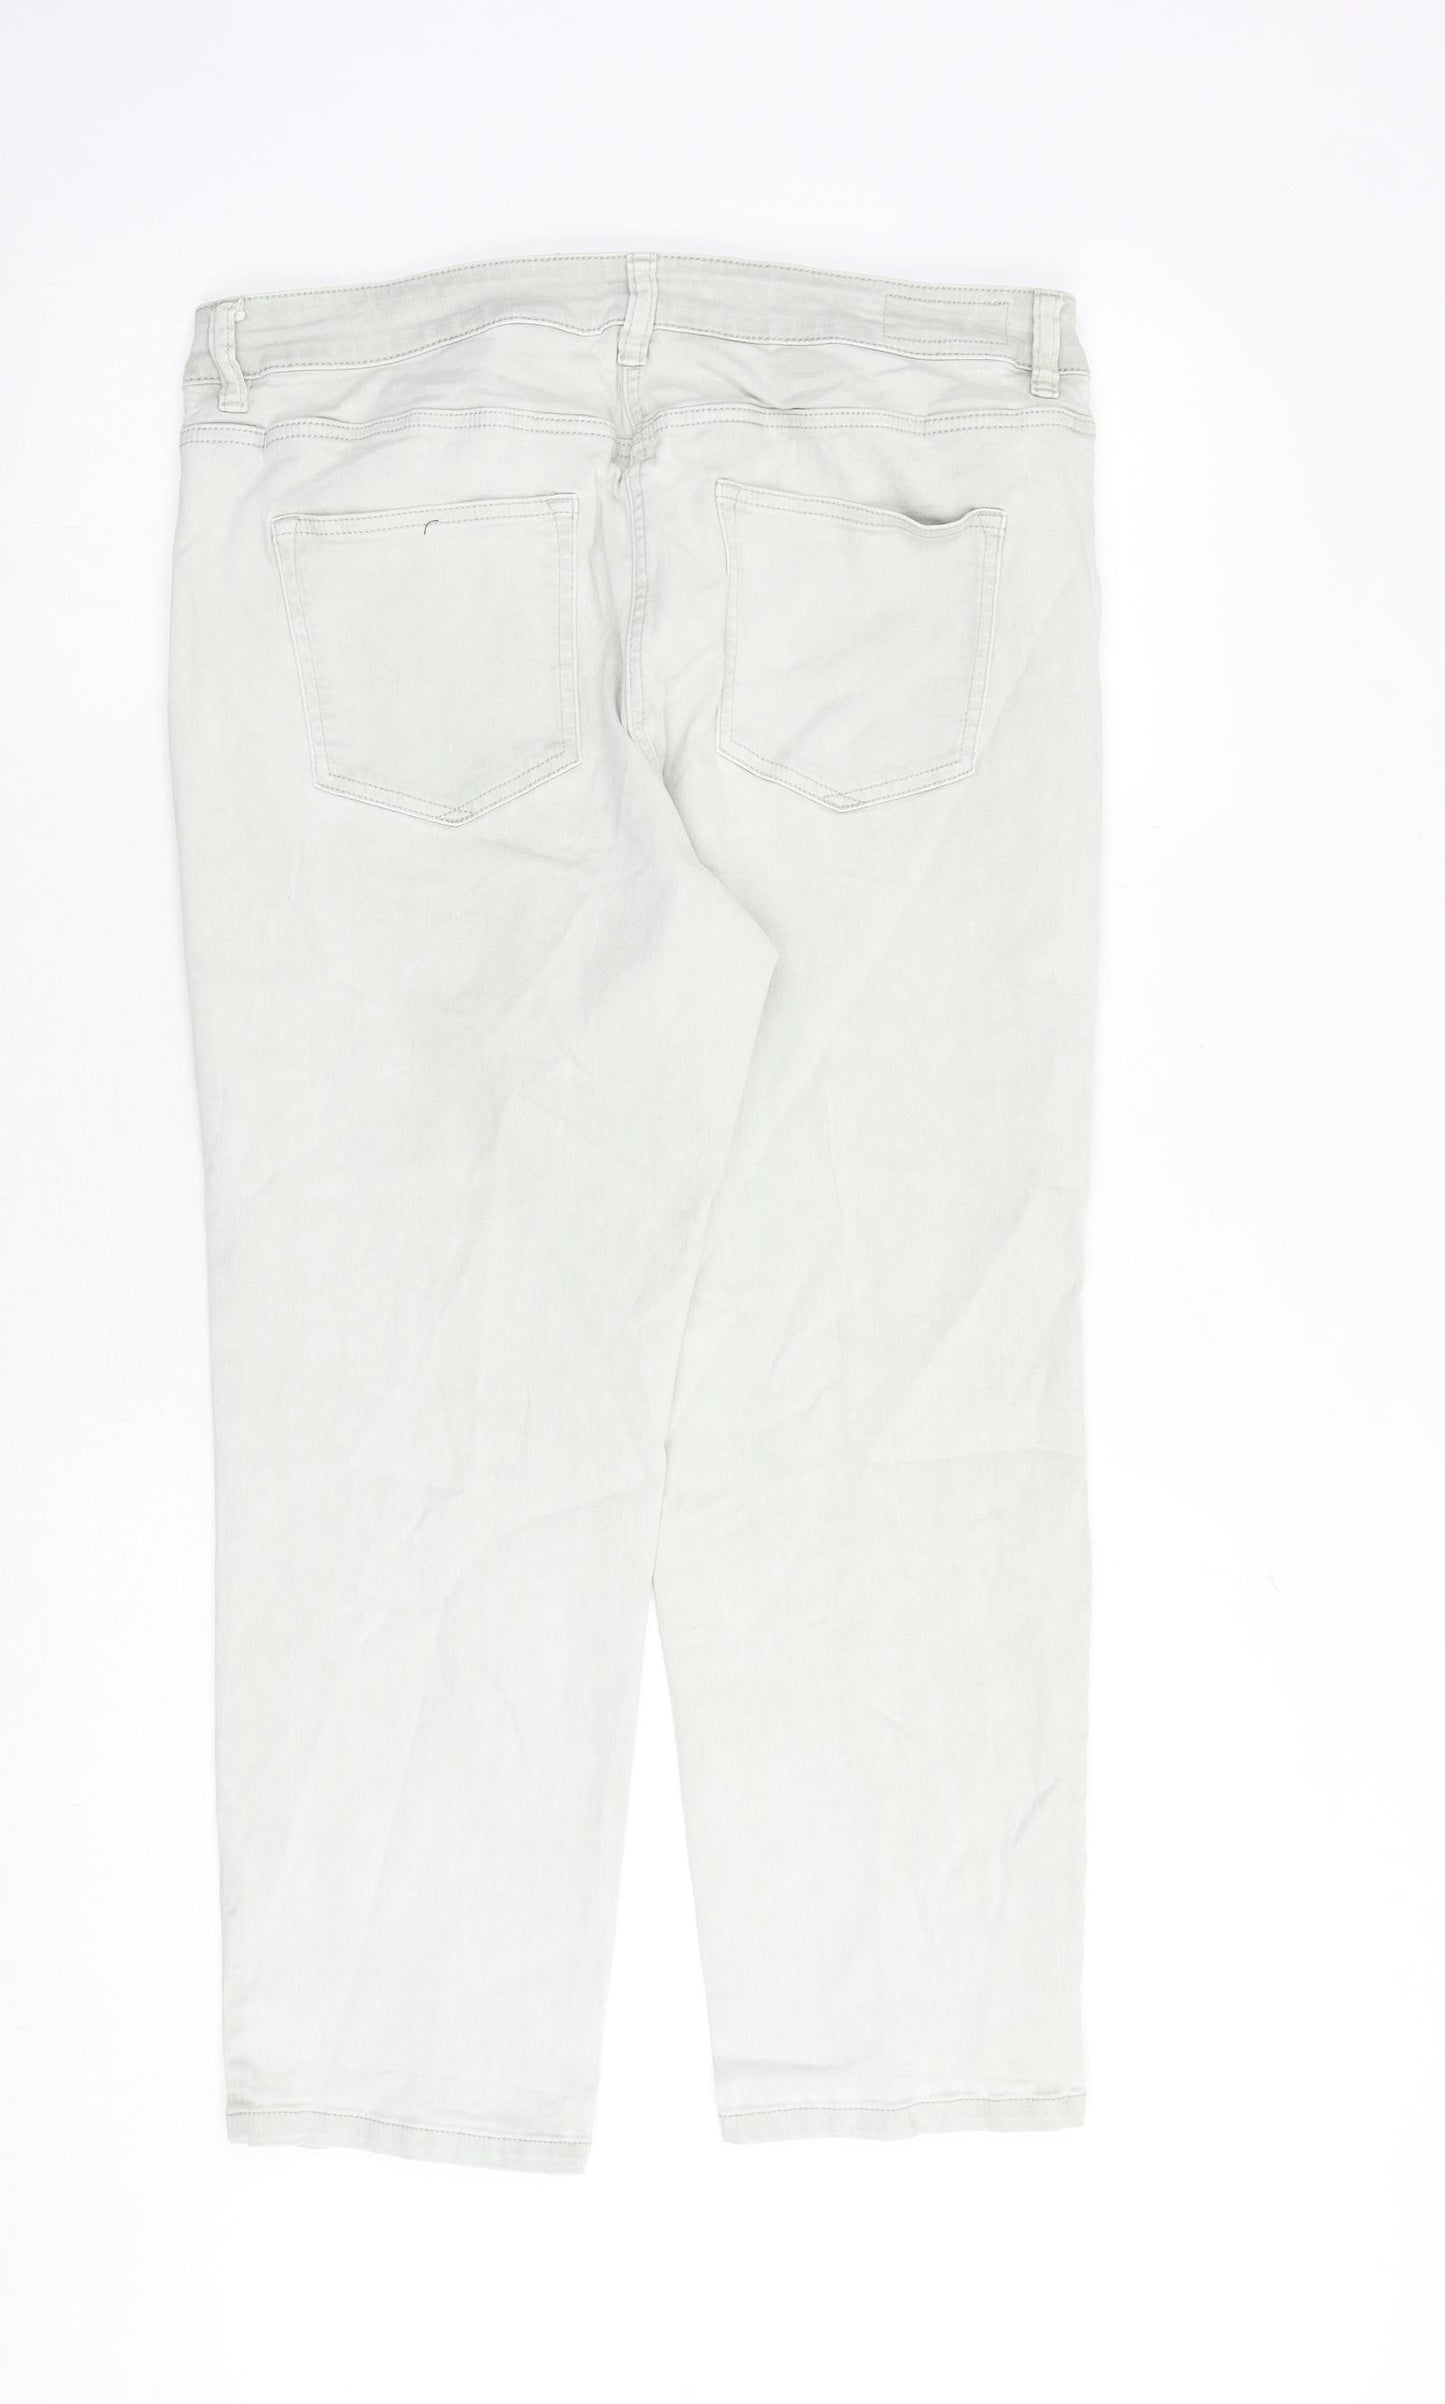 NEXT Womens Green Cotton Straight Jeans Size 16 Regular Zip